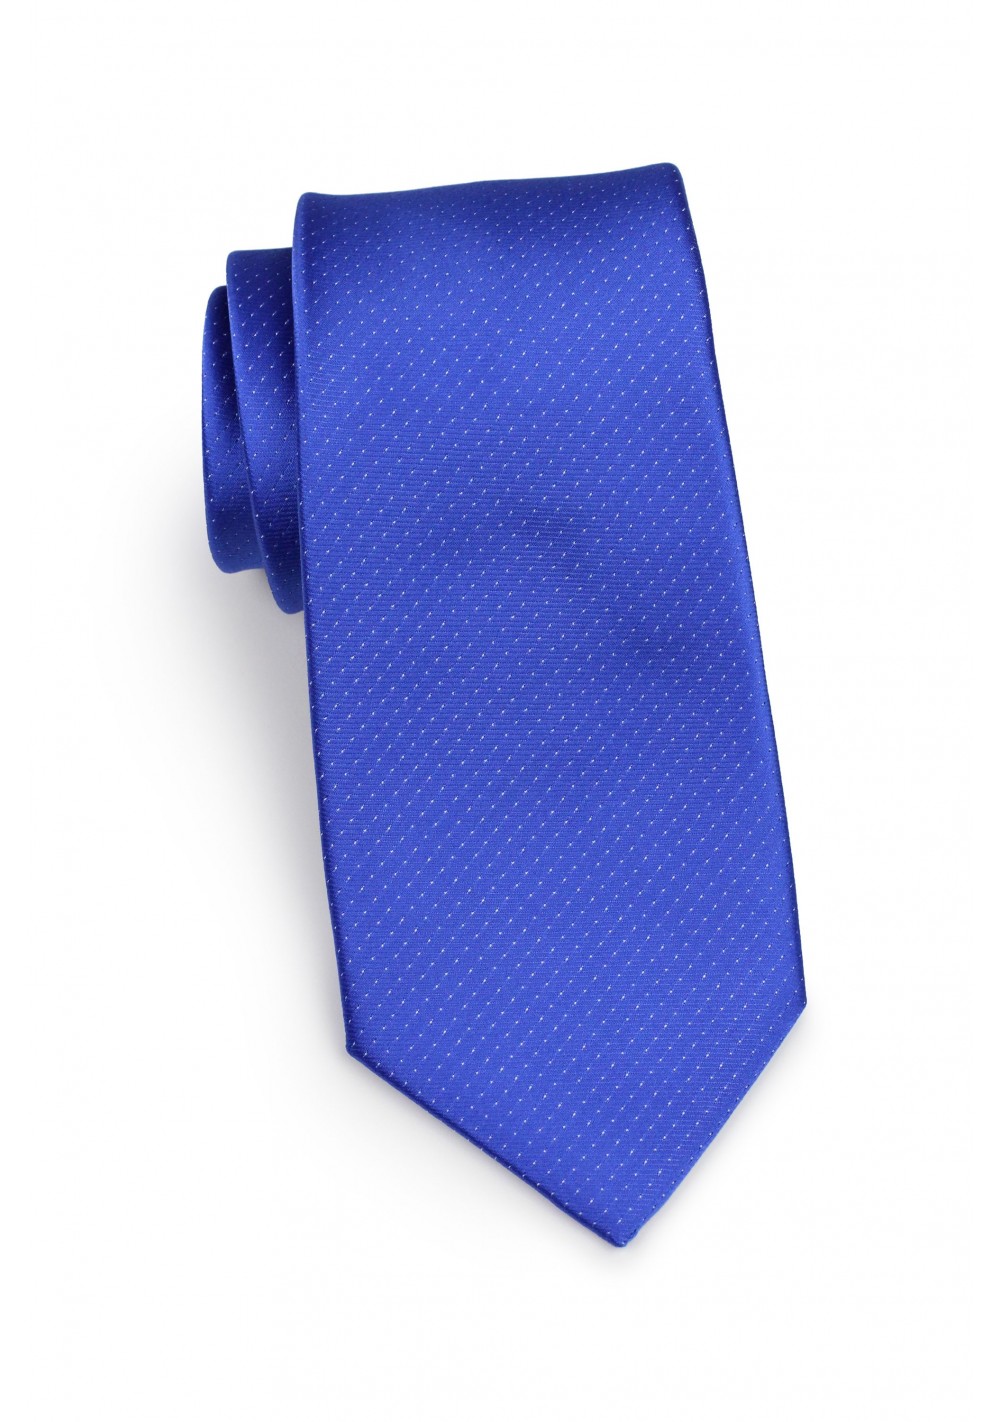 Royal Blue Menswear Set | Formal Men's Accessory Gift Set Royal Blue